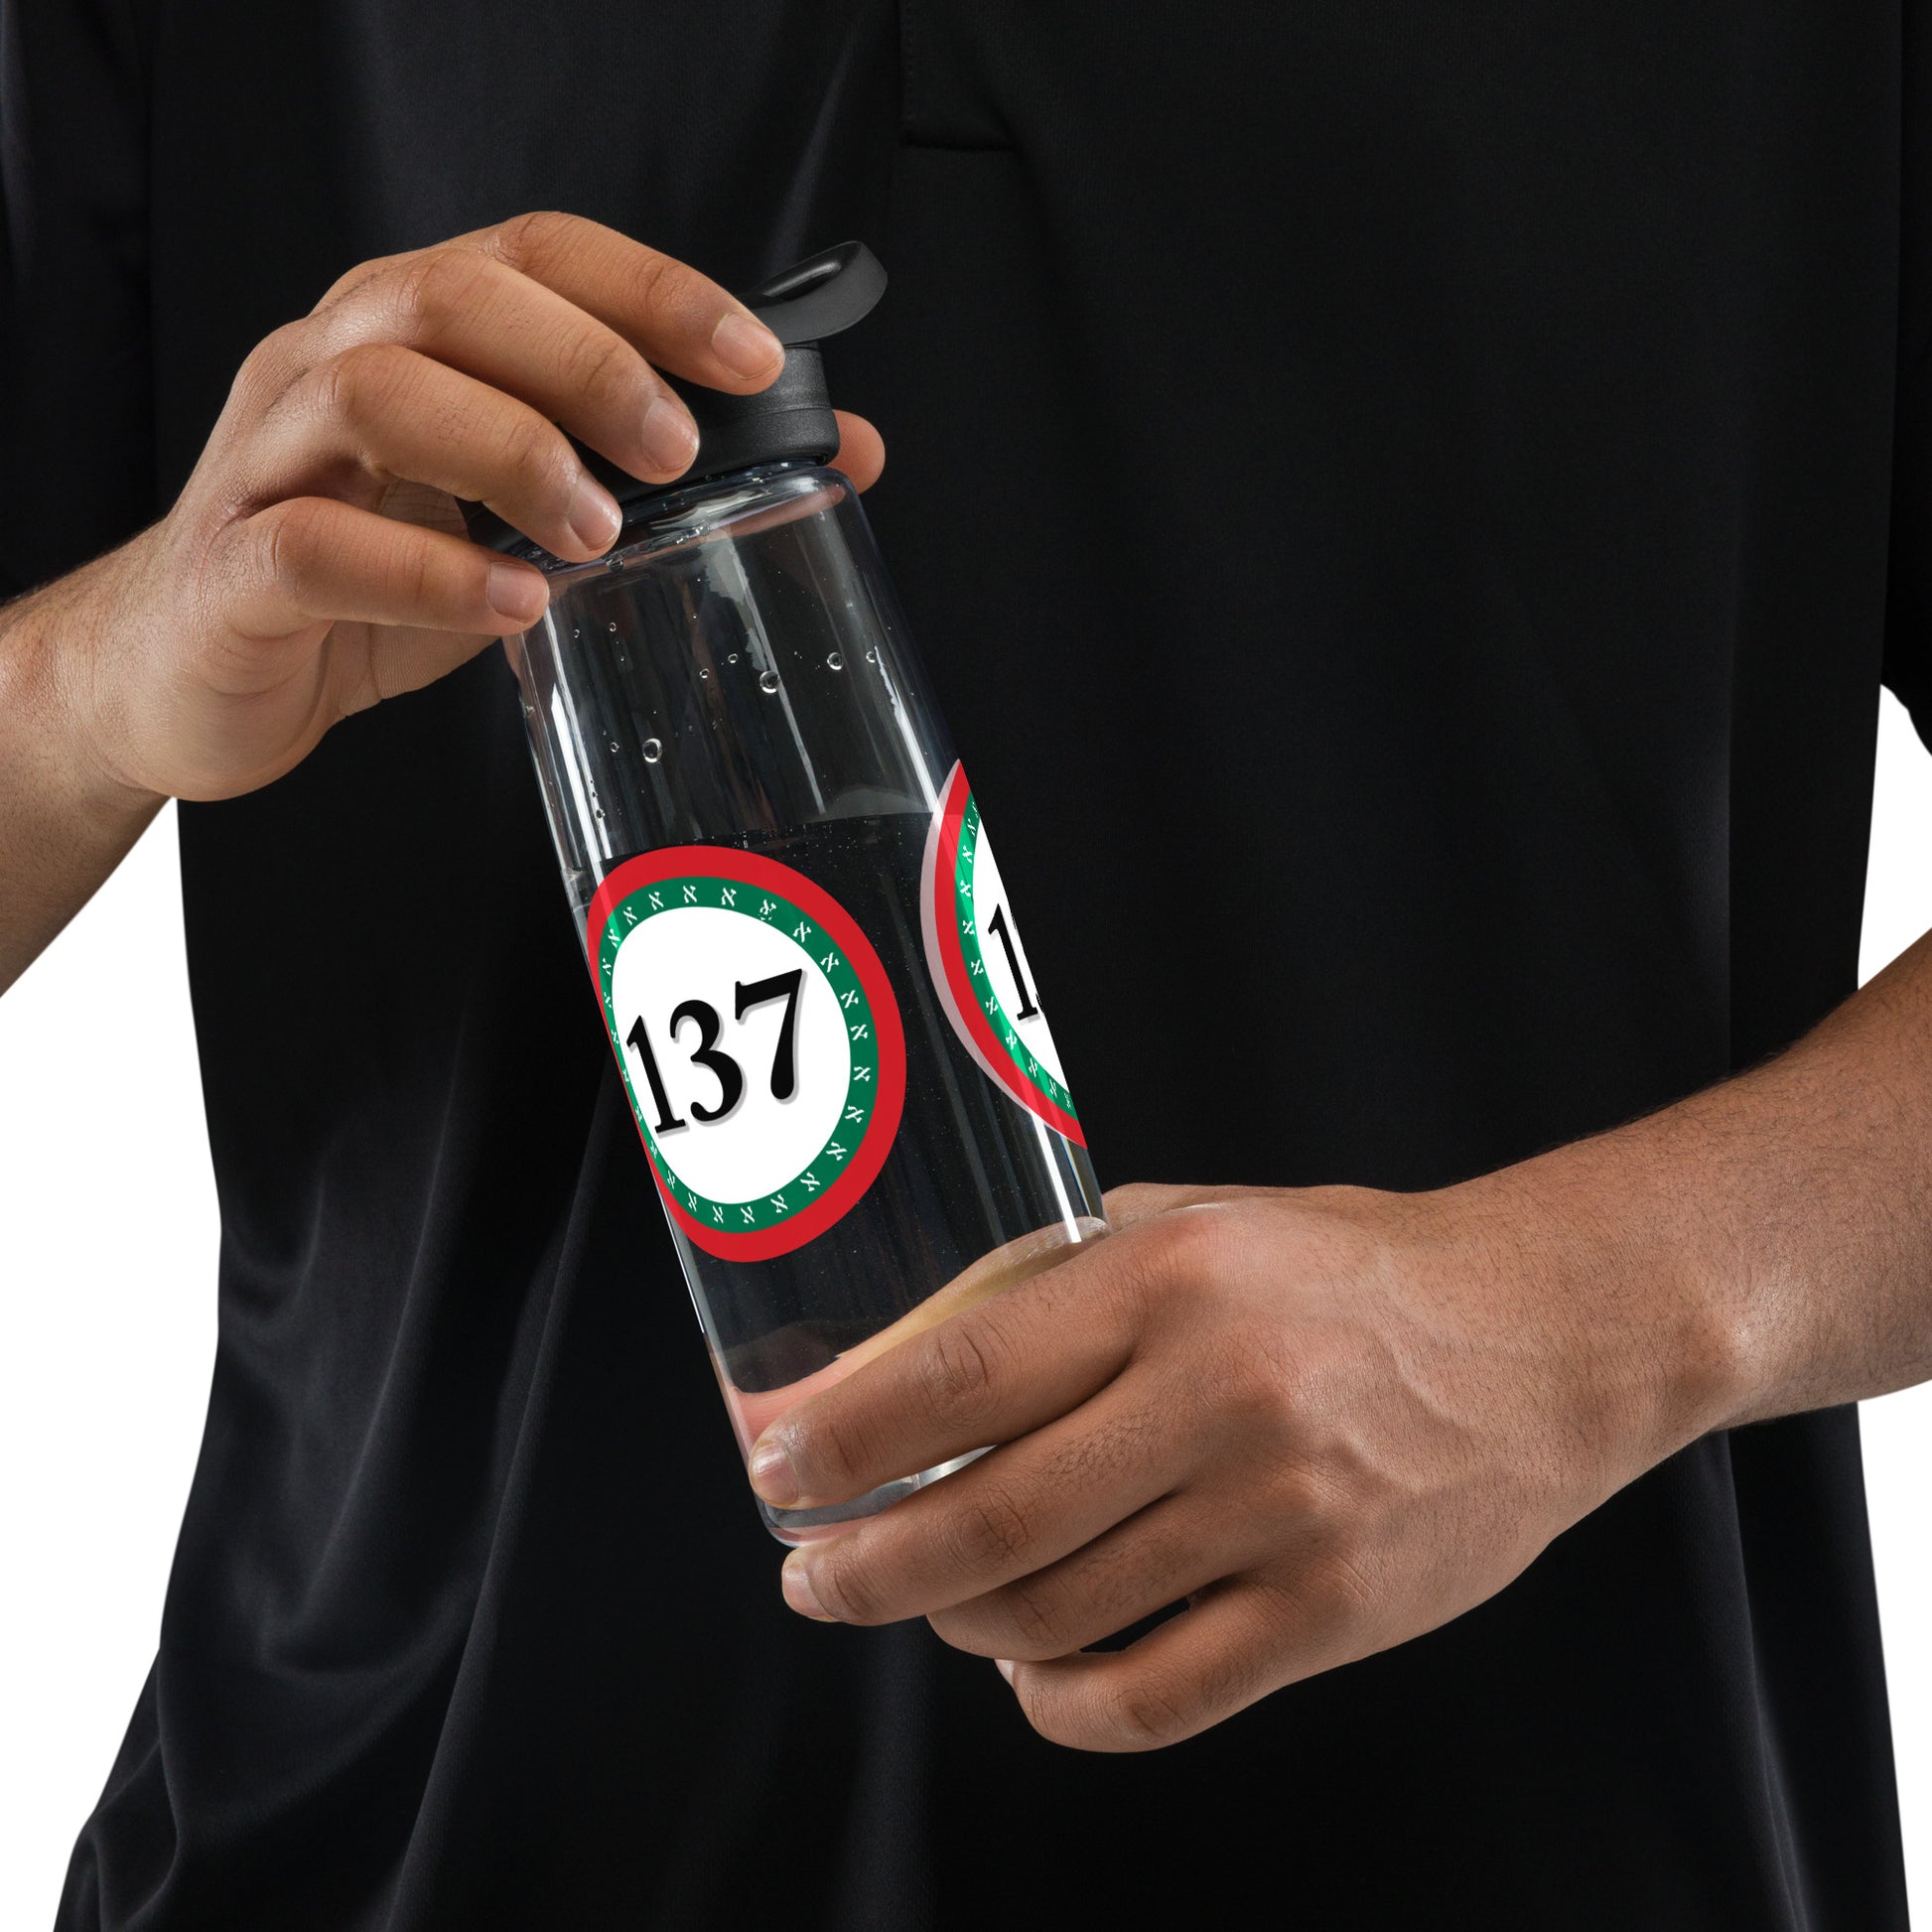 Sports-Water-Bottle-25oz-137-Consciousness-9-137online.com